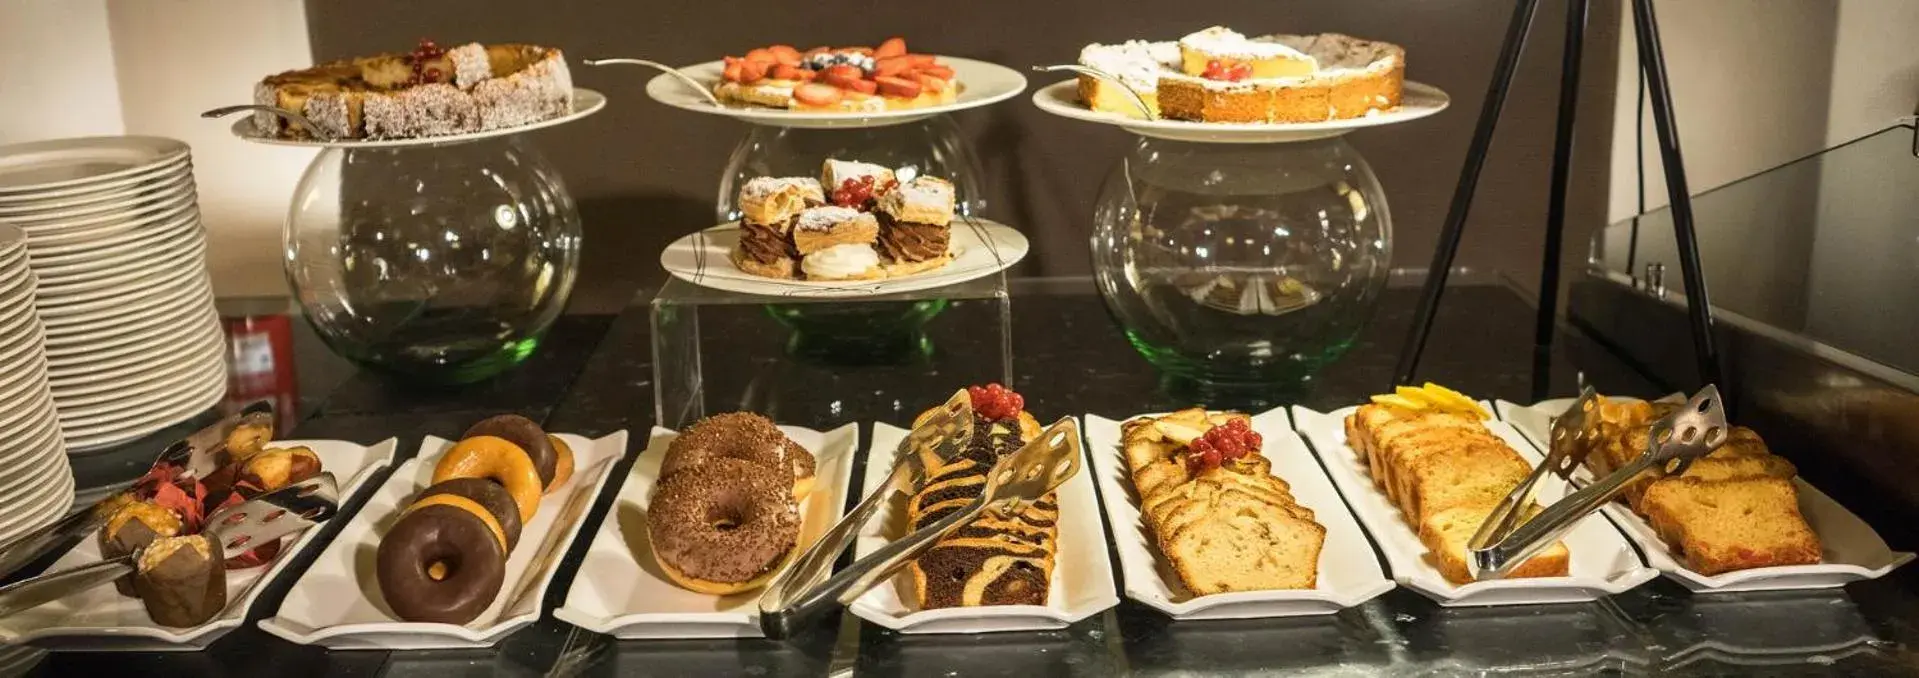 Buffet breakfast, Food in Hotel Royal Palace